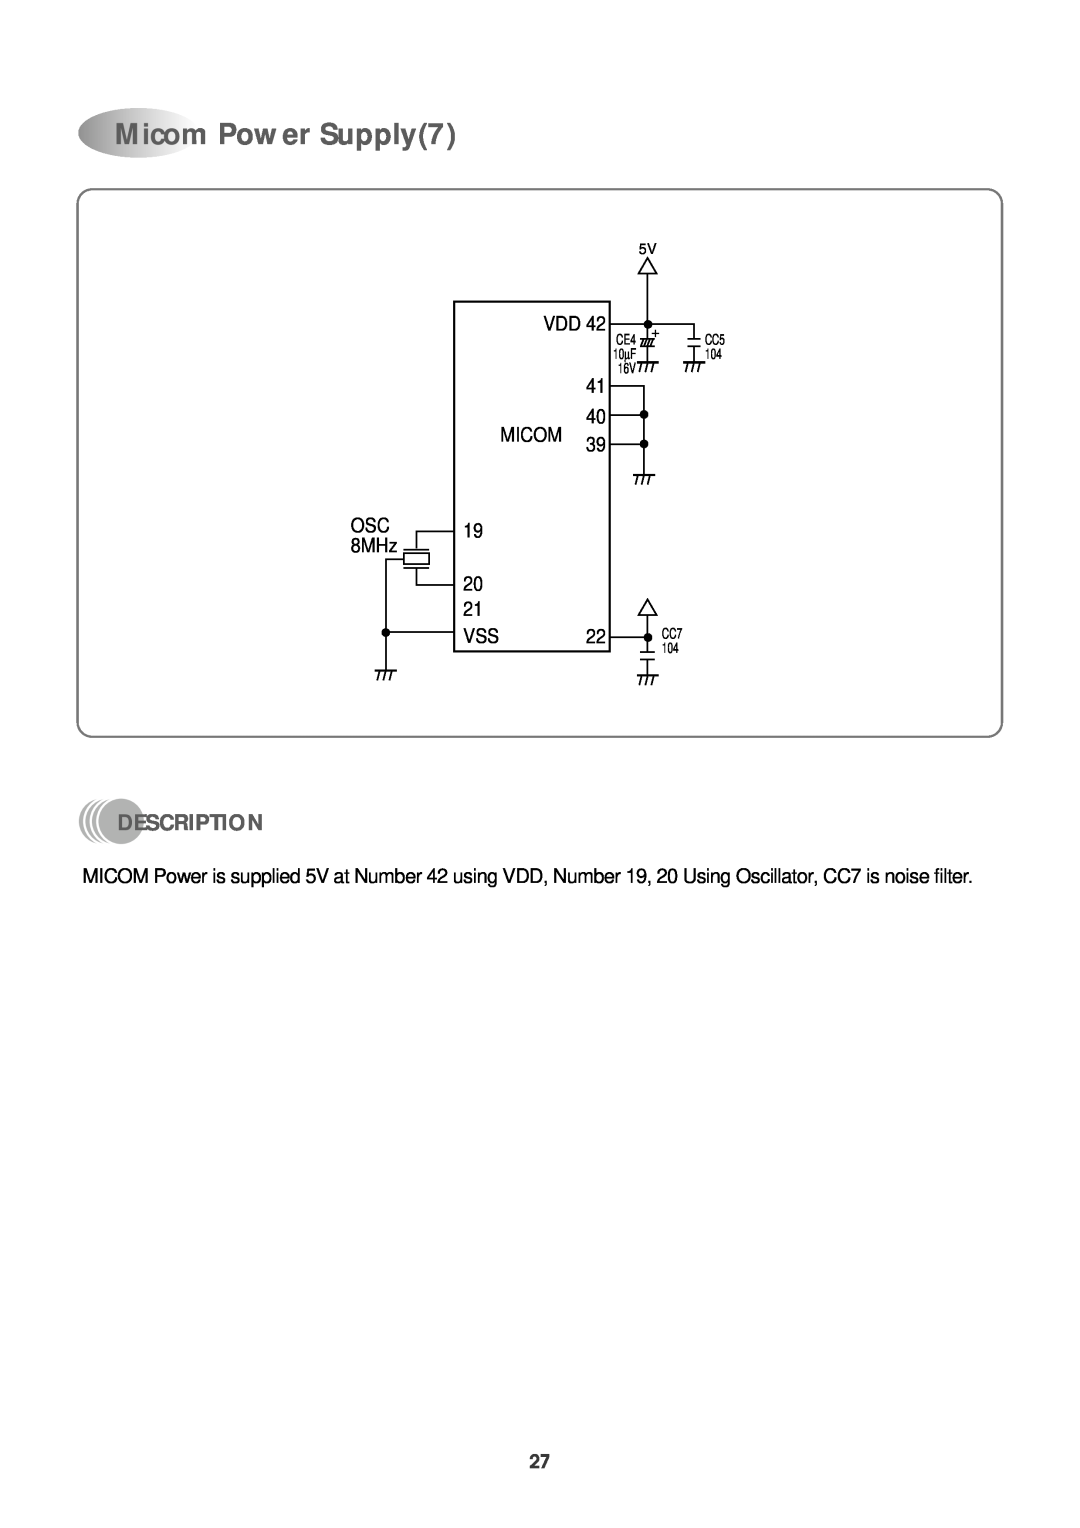 Daewoo DPB-280LH service manual Micom Power Supply7, Description, OSC 8MHz, Vdd, 19 20 21 VSS, 10∝ F 